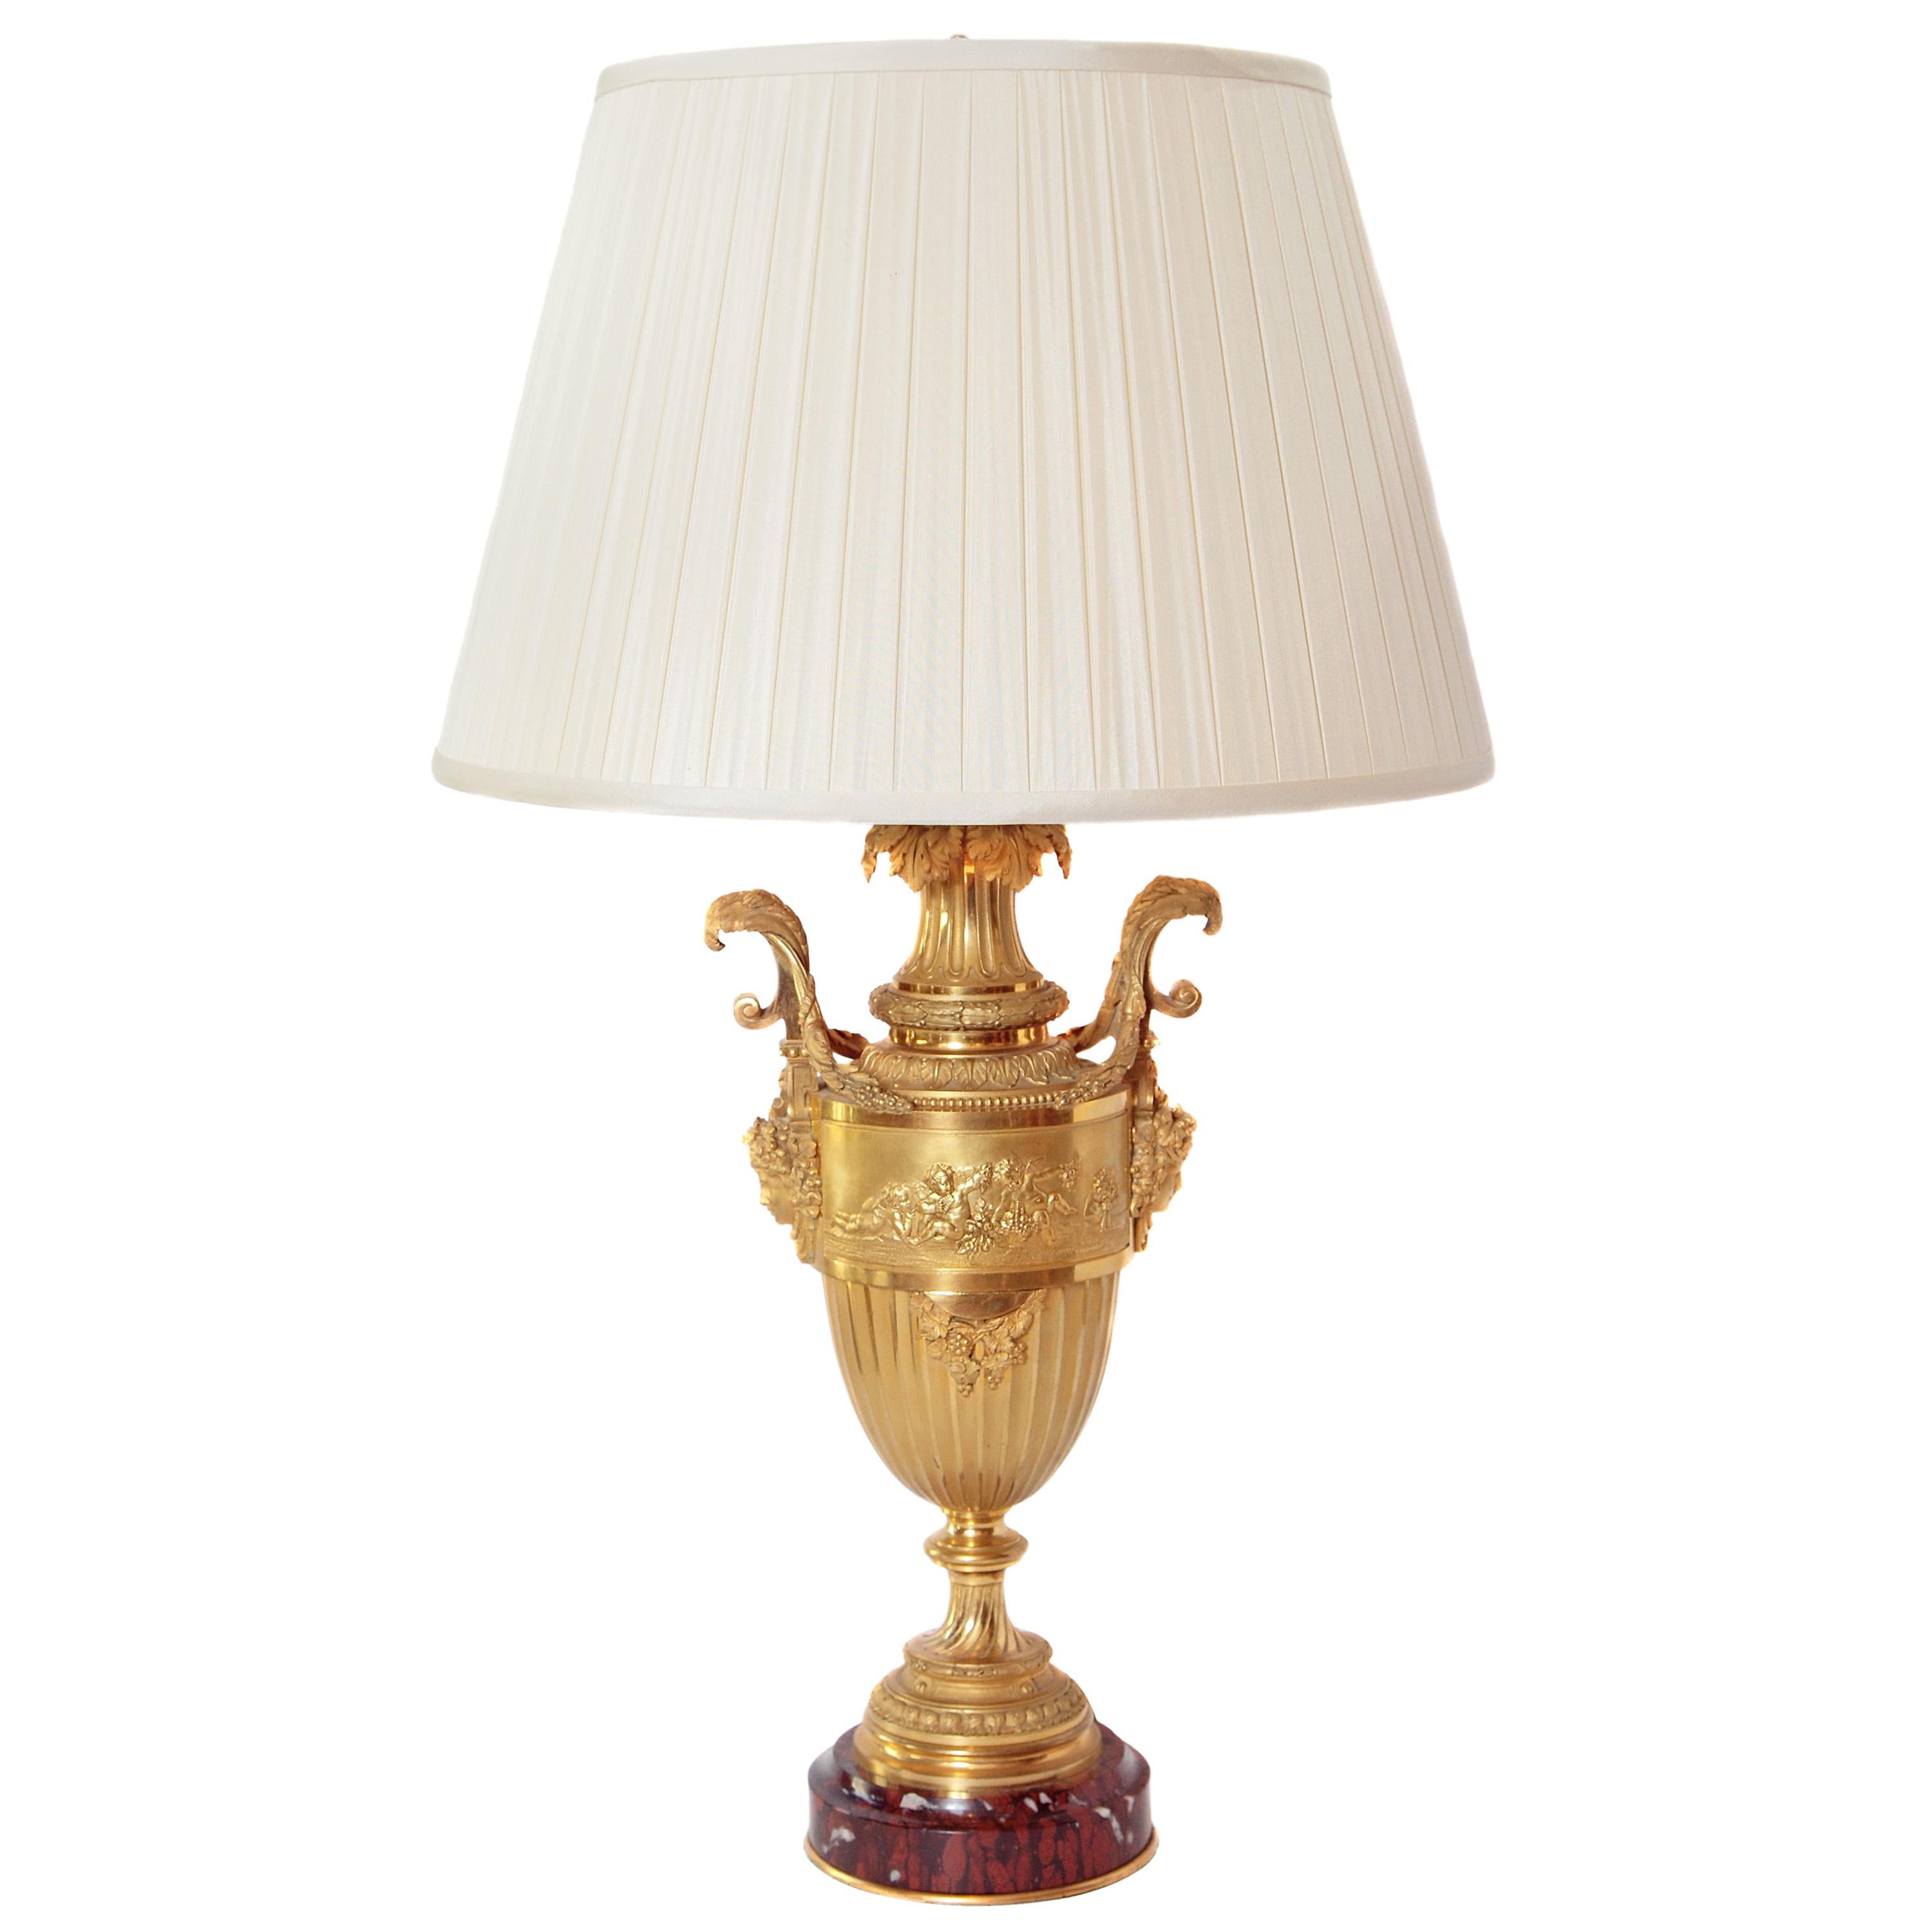 19th Century Gilt Bronze French Lamp